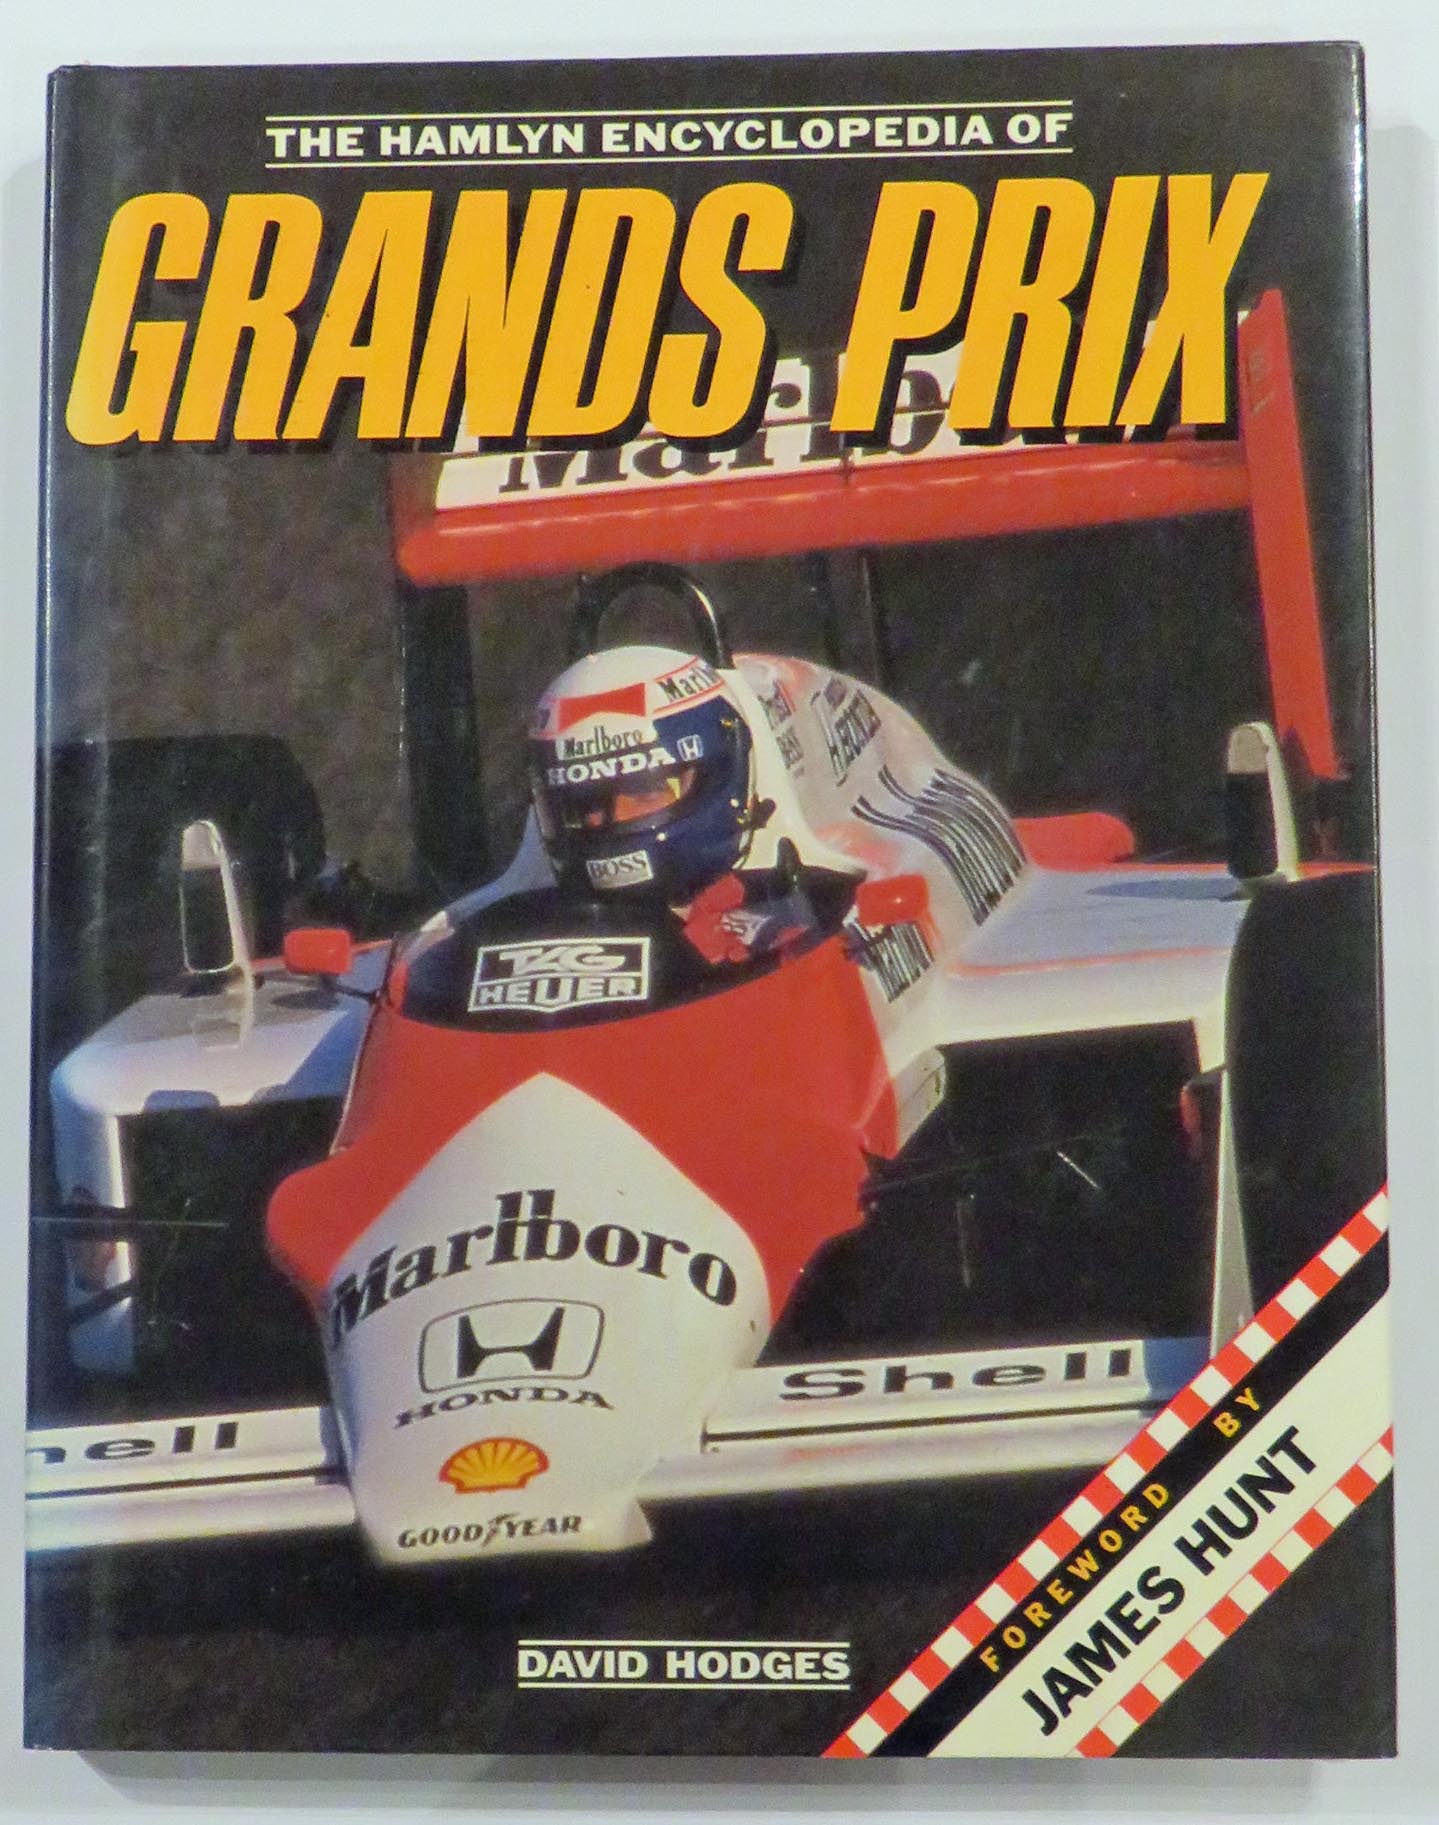 The Hamlyn Encyclopaedia of Grands Prix